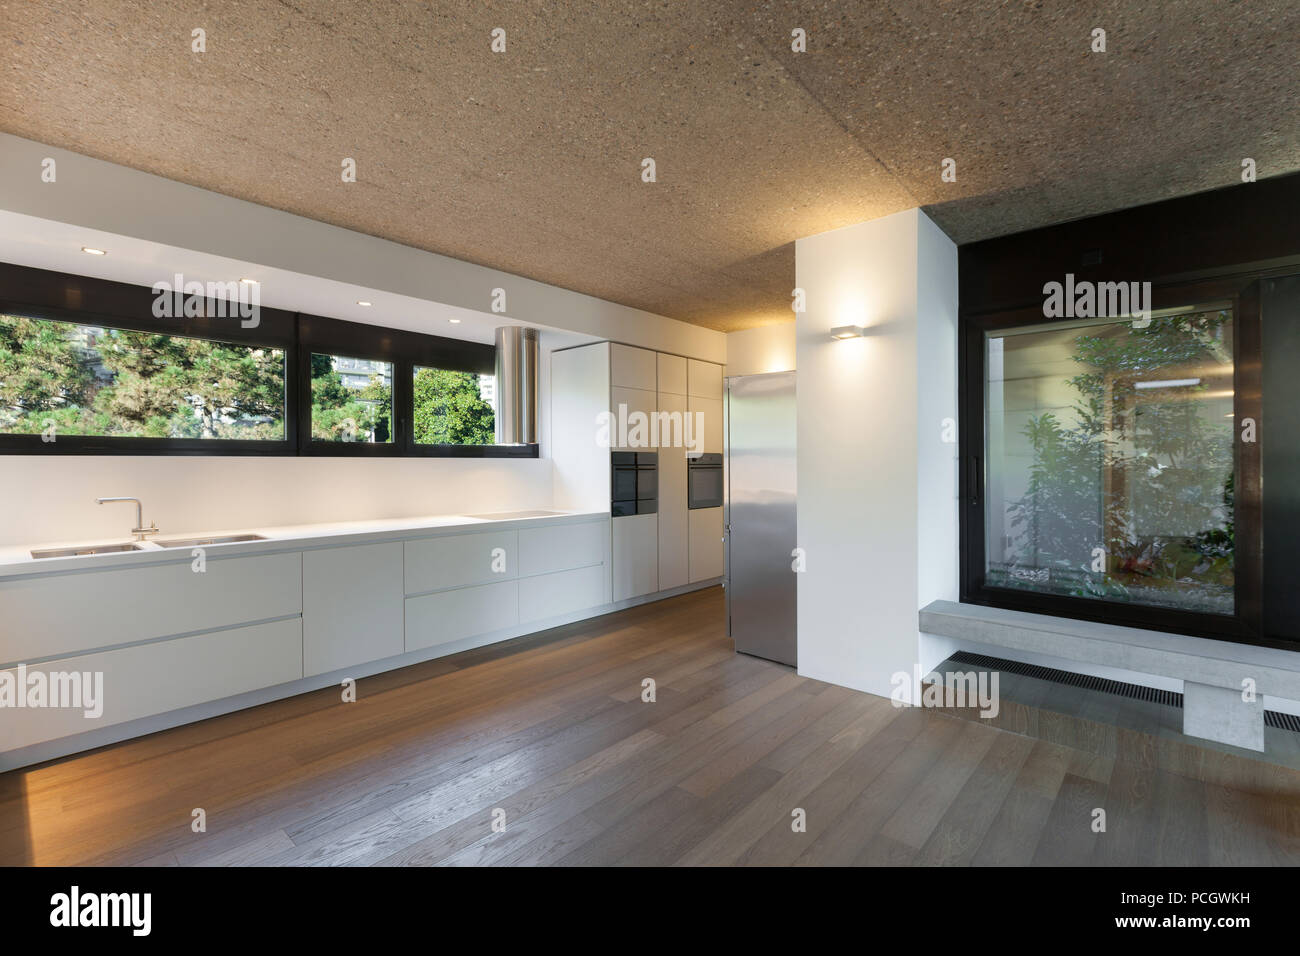 Architecture, modern apartment, domestic kitchen with windows Stock Photo